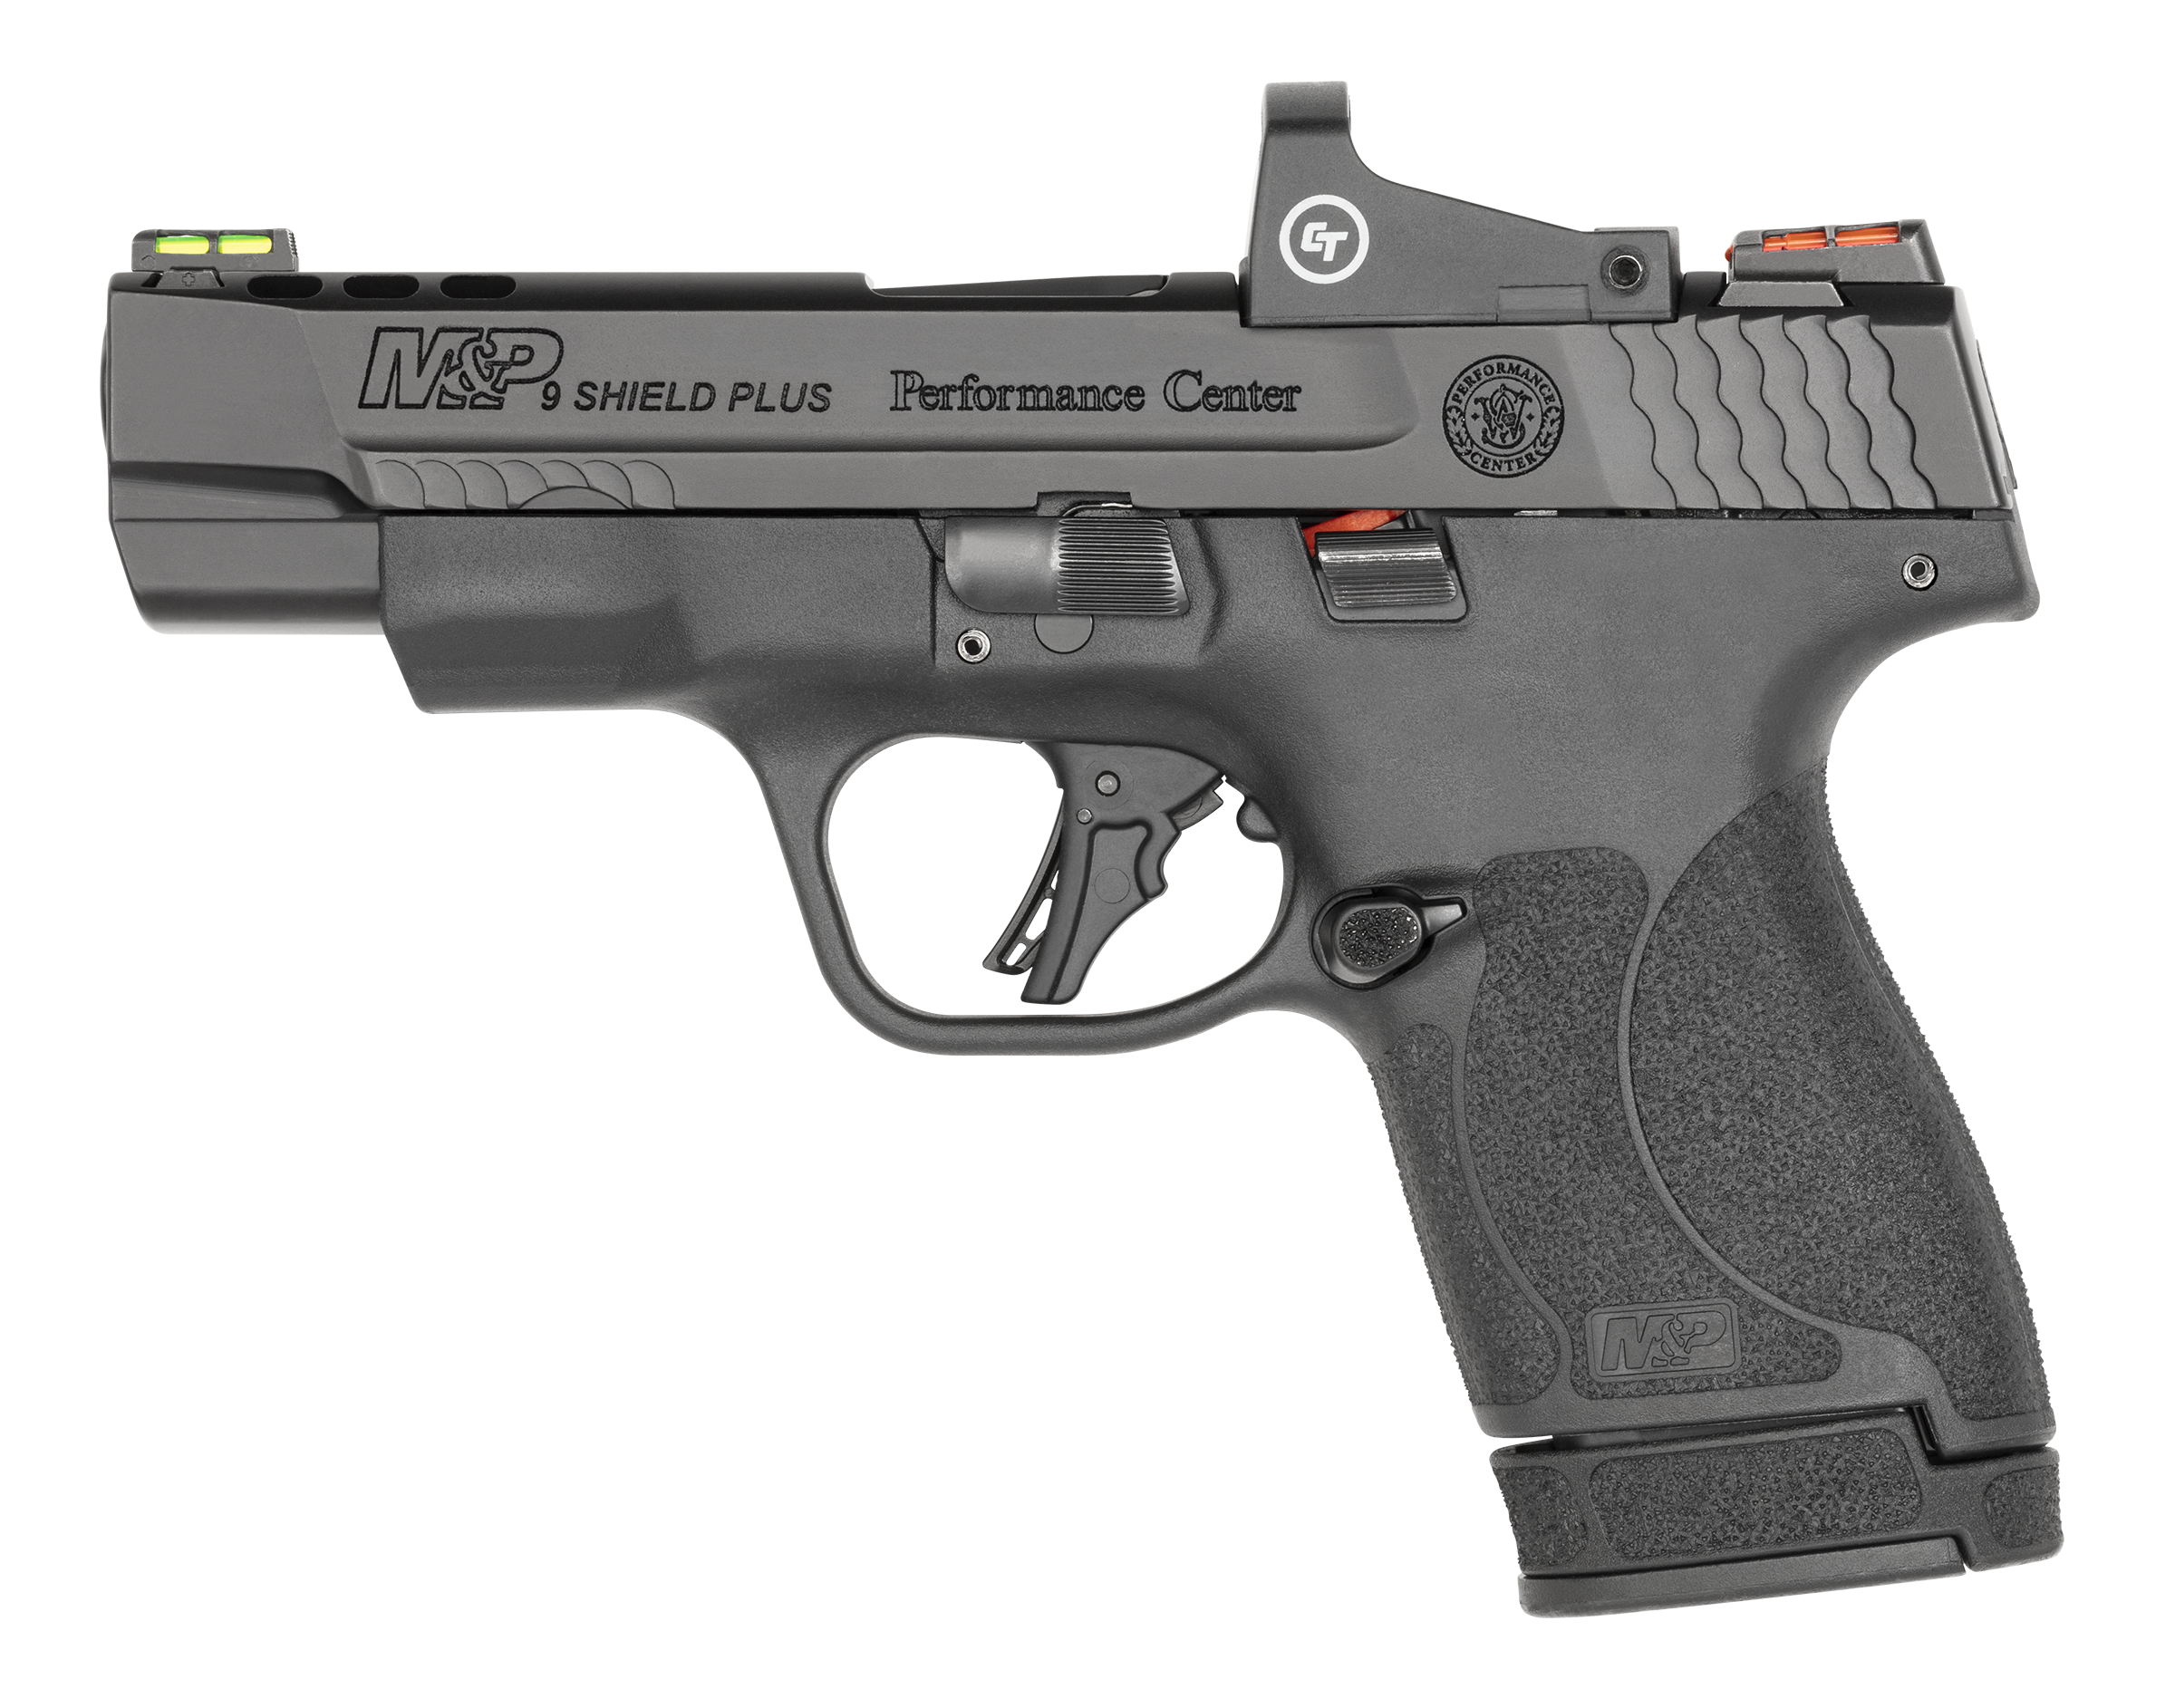 Smith & Wesson M&P9 Shield Plus Performance Center, Ported 9mm Pistol, Crimson Trace Red Dot Sight, Black (13253)